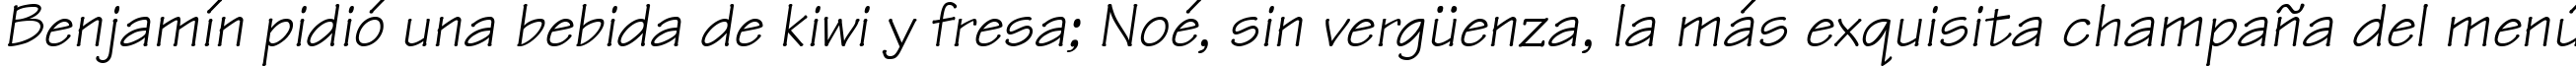 Пример написания шрифтом Technical Italic текста на испанском